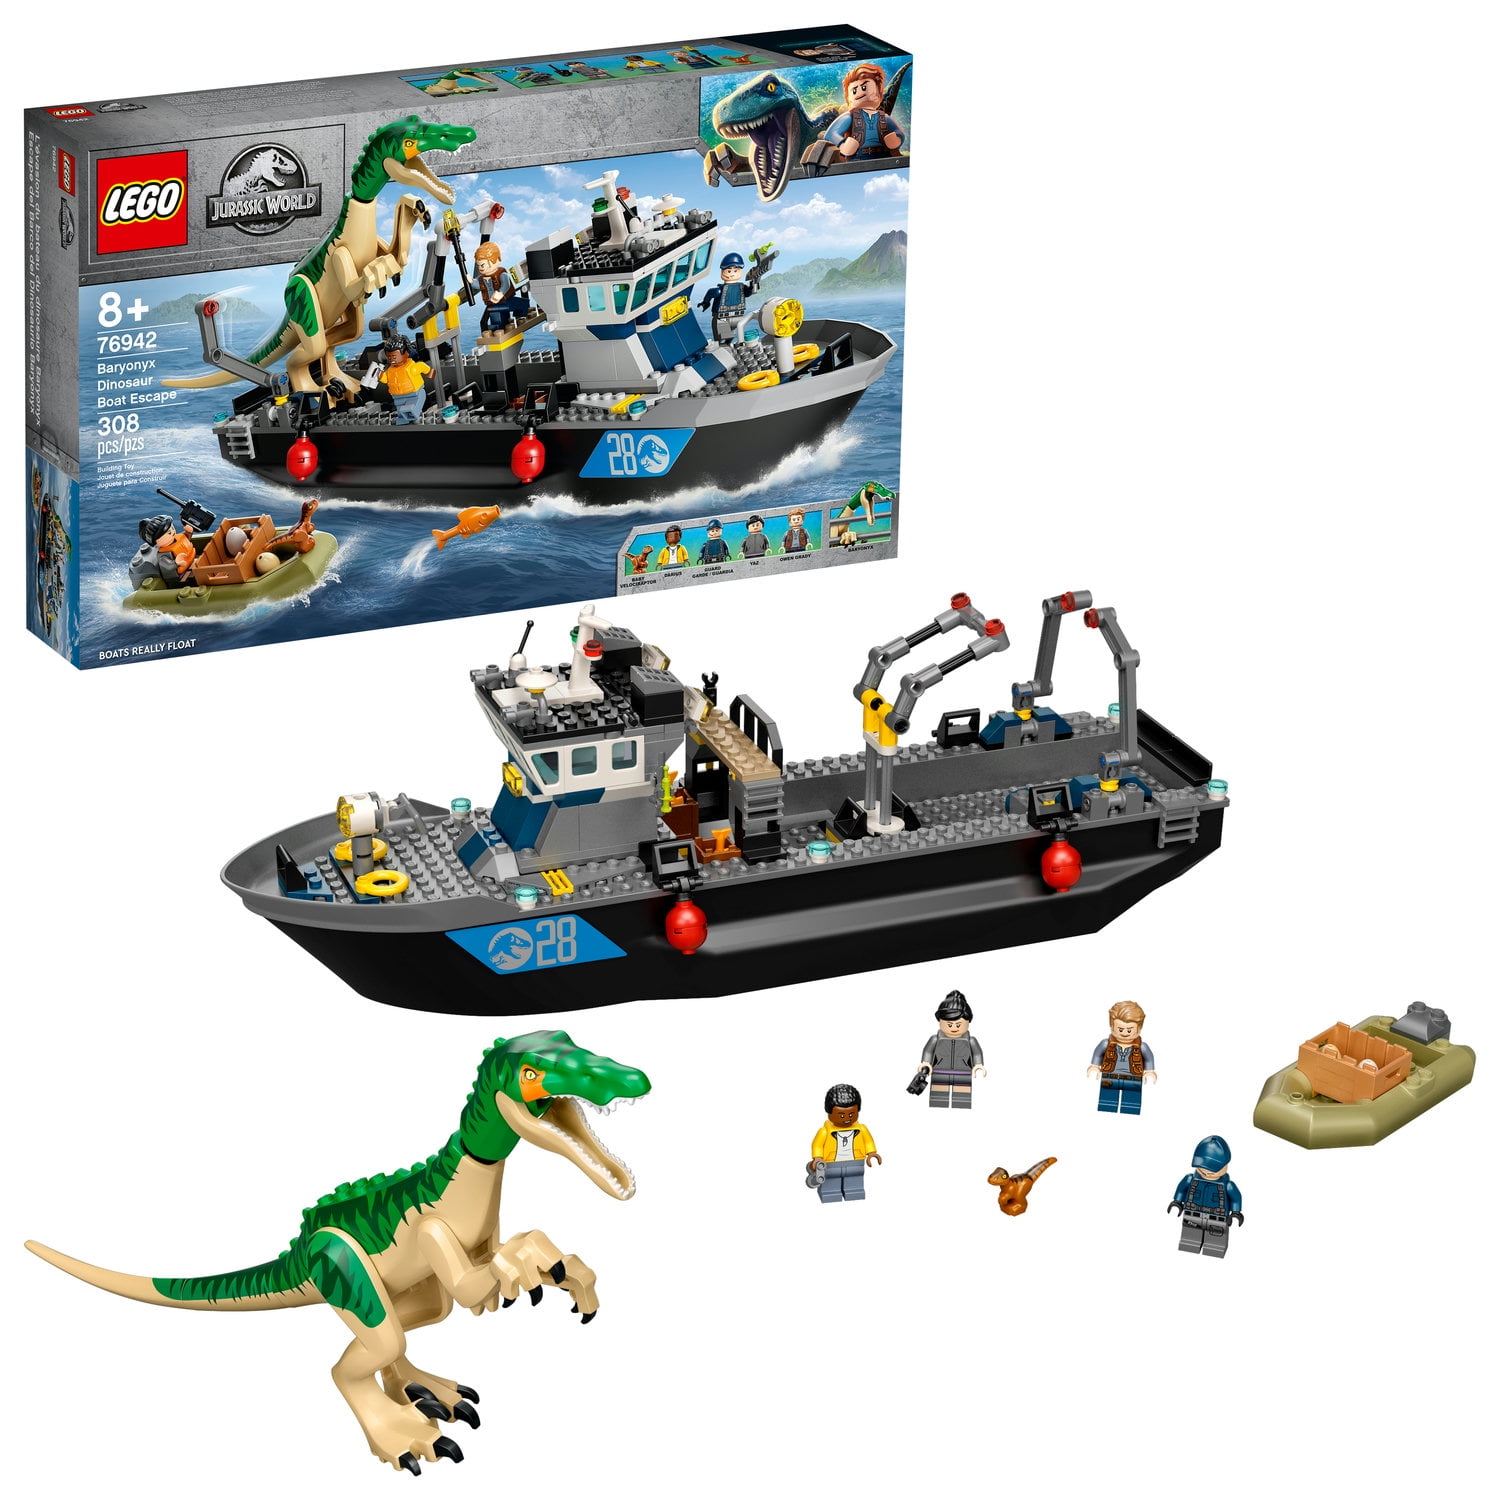 76942 LEGO Jurassic World Baryonyx Dinosaur Boat Escape Set 308 Pieces Age 8+